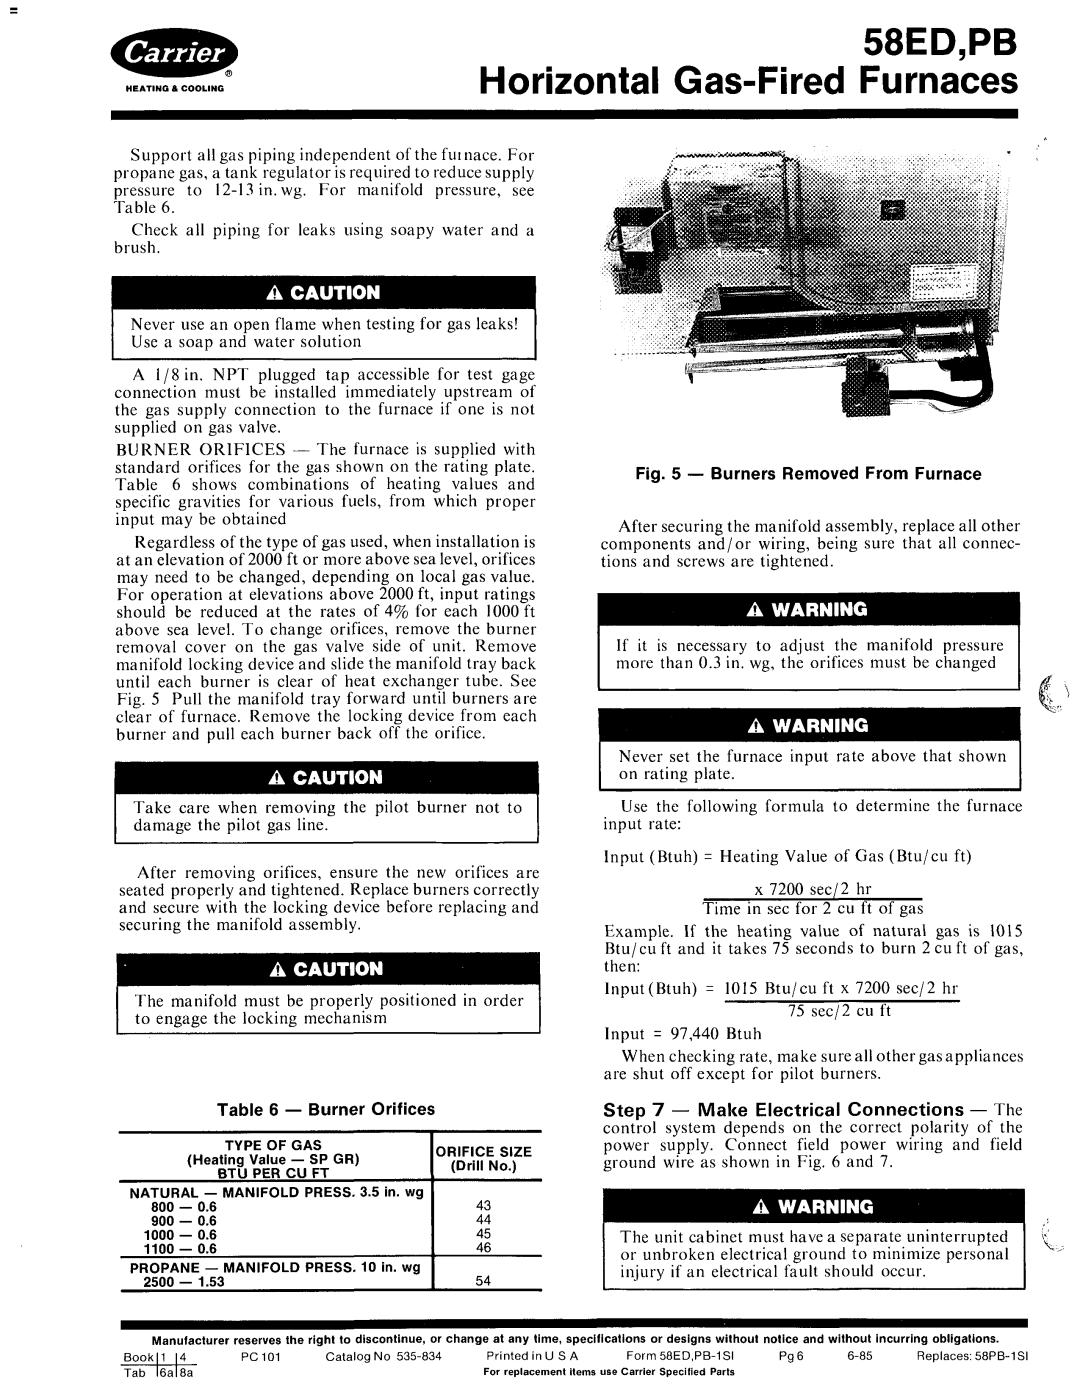 Carrier PB, 58ED manual 